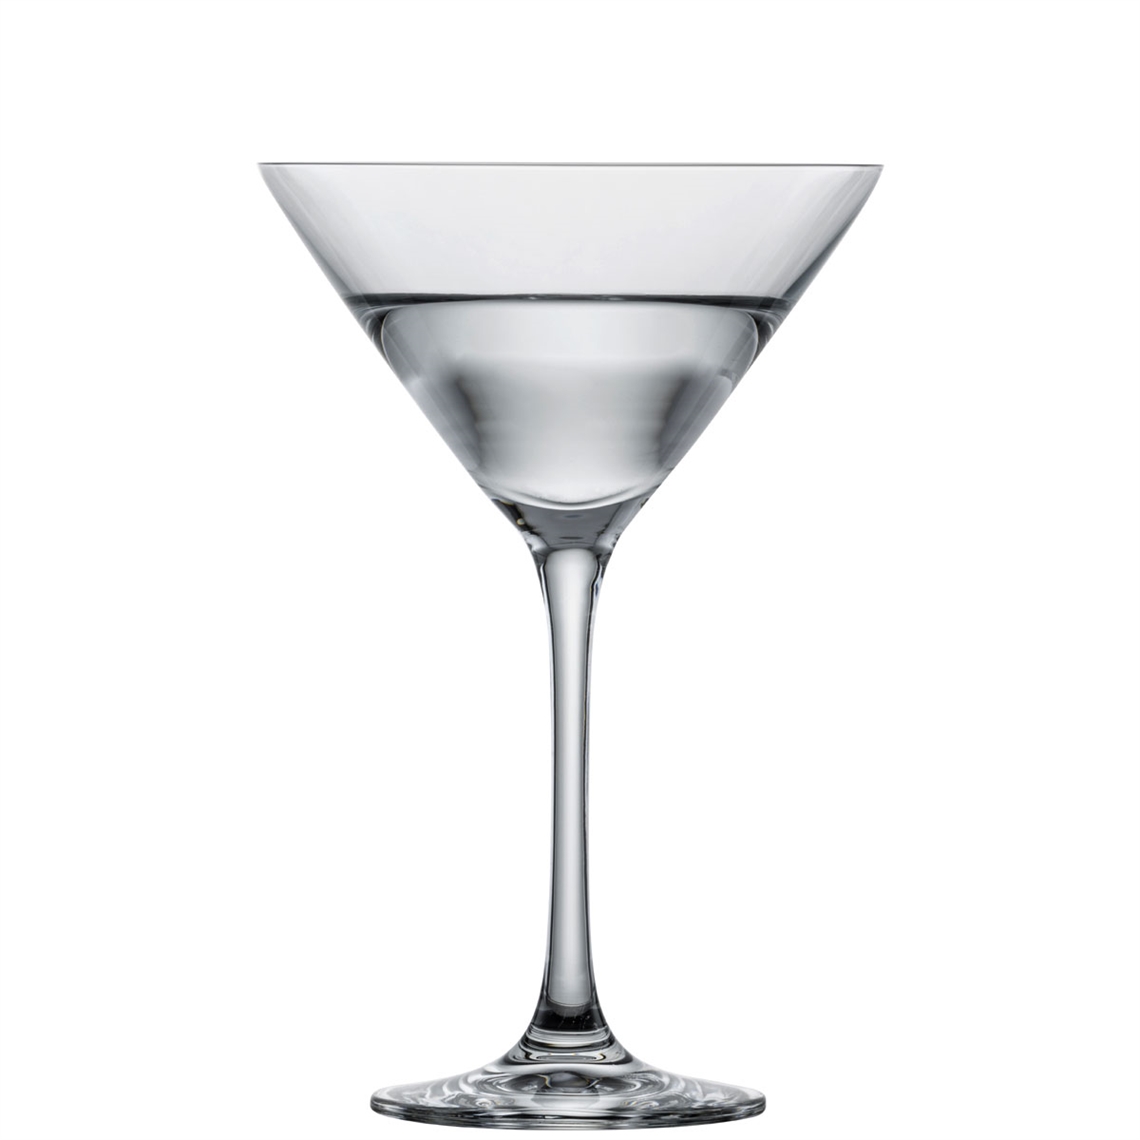 Schott Zwiesel Restaurant Classico - Martini Glass 270ml